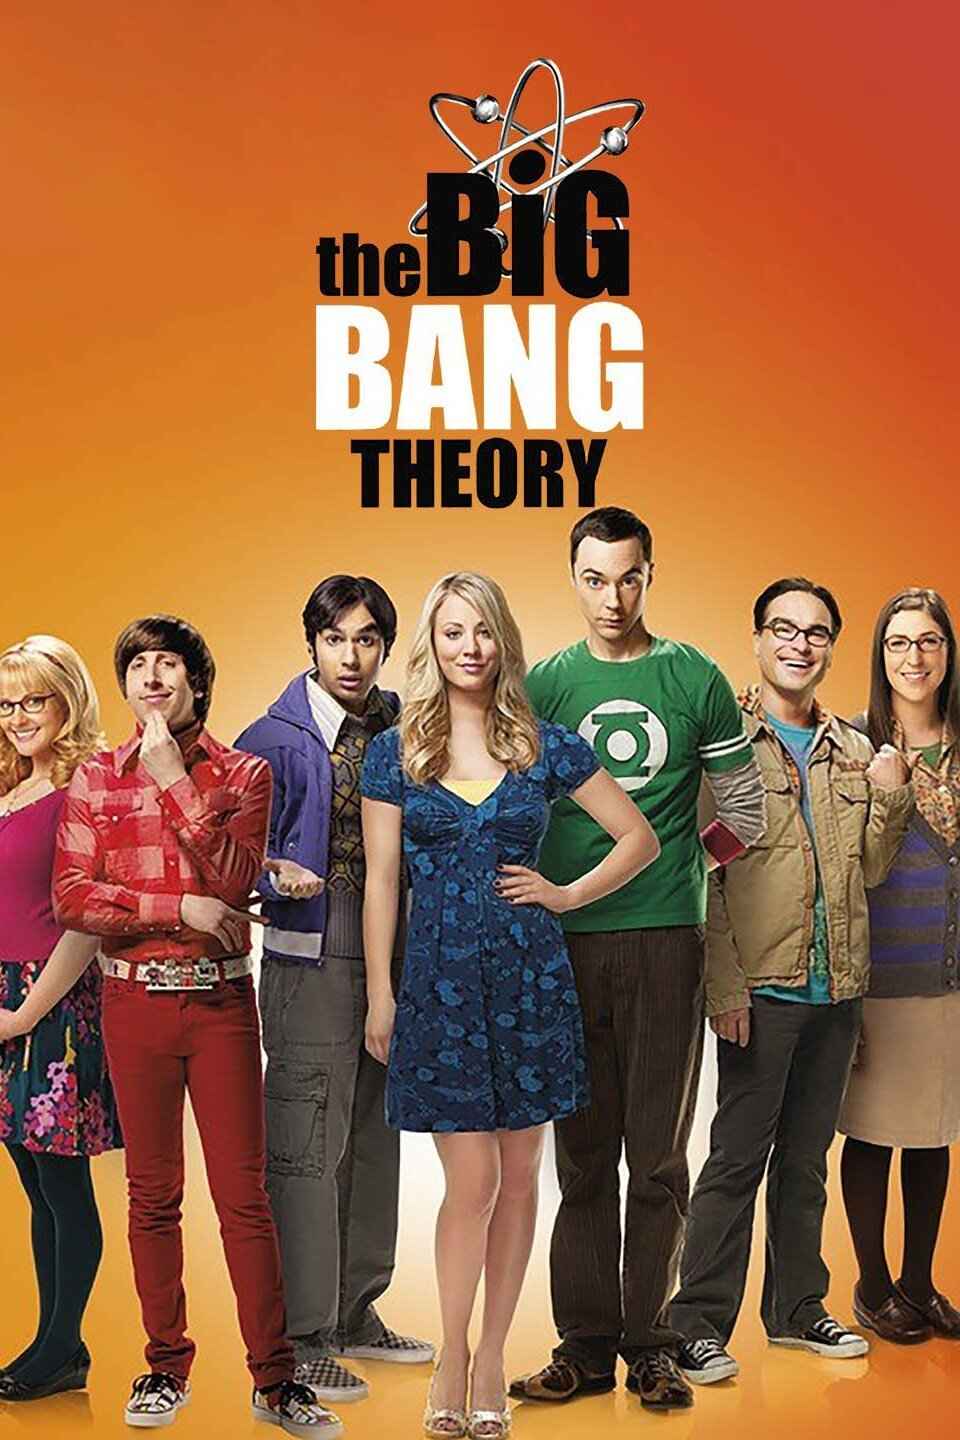  The Big Bang Theory : Quand le Génie Rencontr